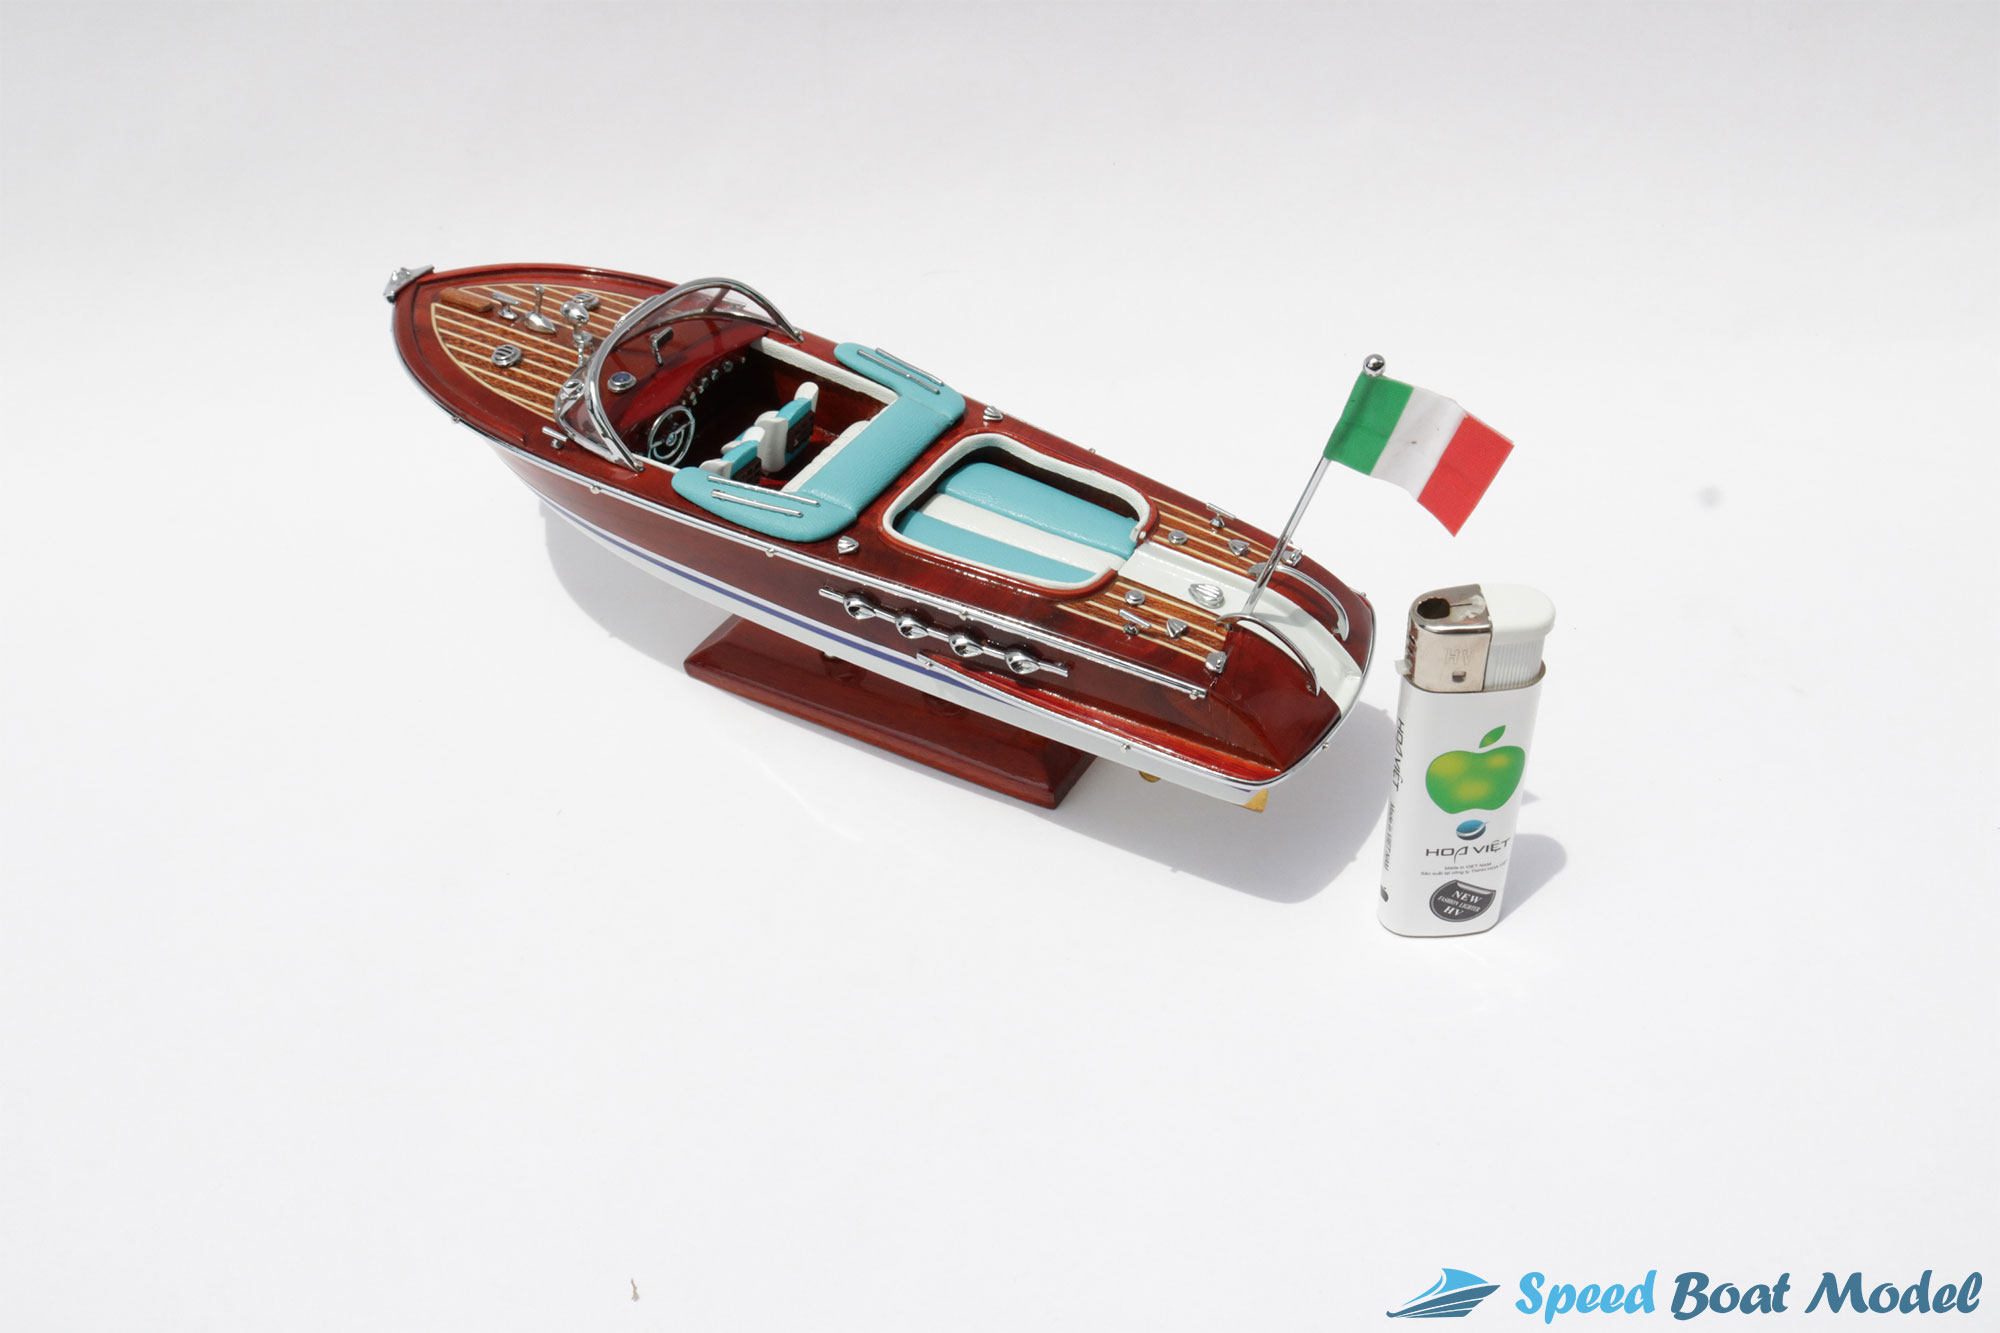 Riva Aquarama 25 Classic Speed Boat Model 9.8"